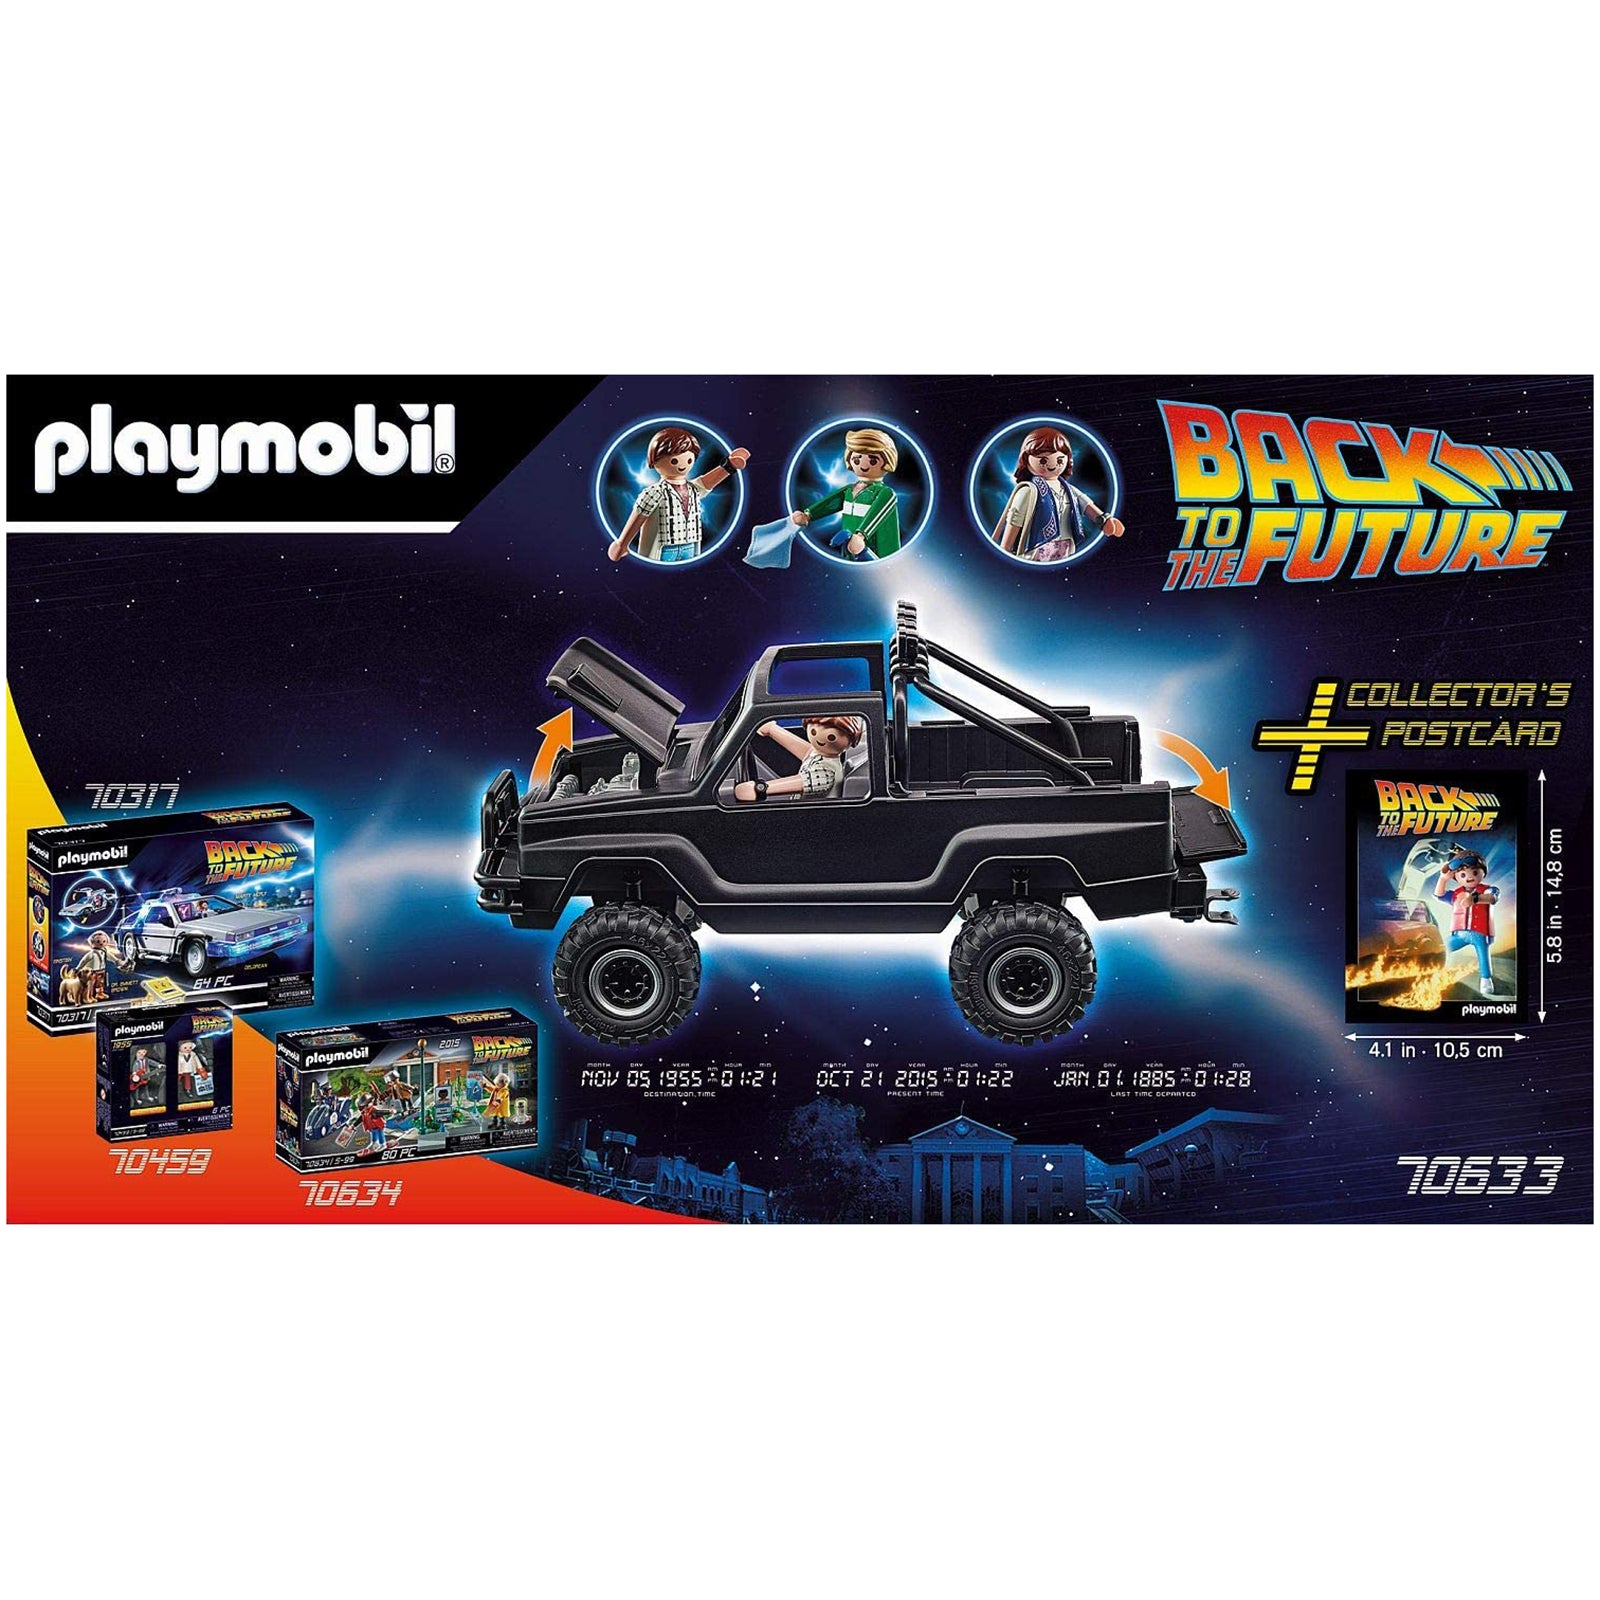 Playmobil - 70633 - back to the future - pick-up de marty - La Poste